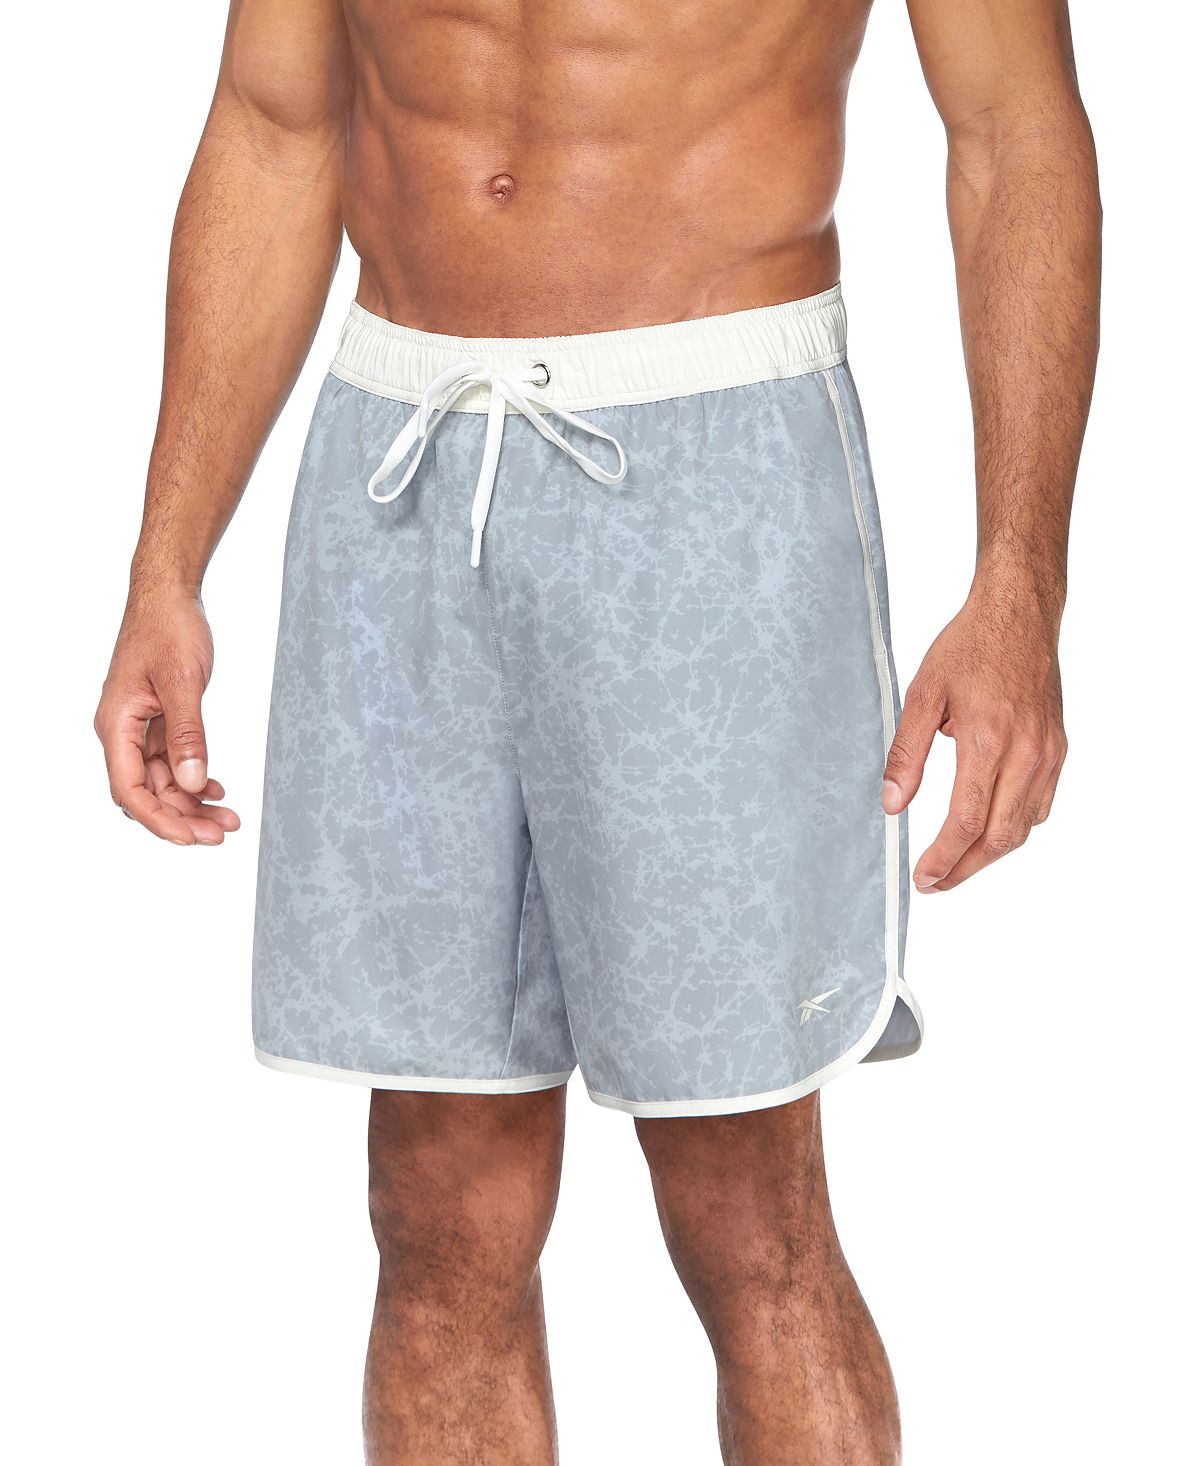 Мужские шорты для плавания Core Volley 7 дюймов Reebok цена и фото